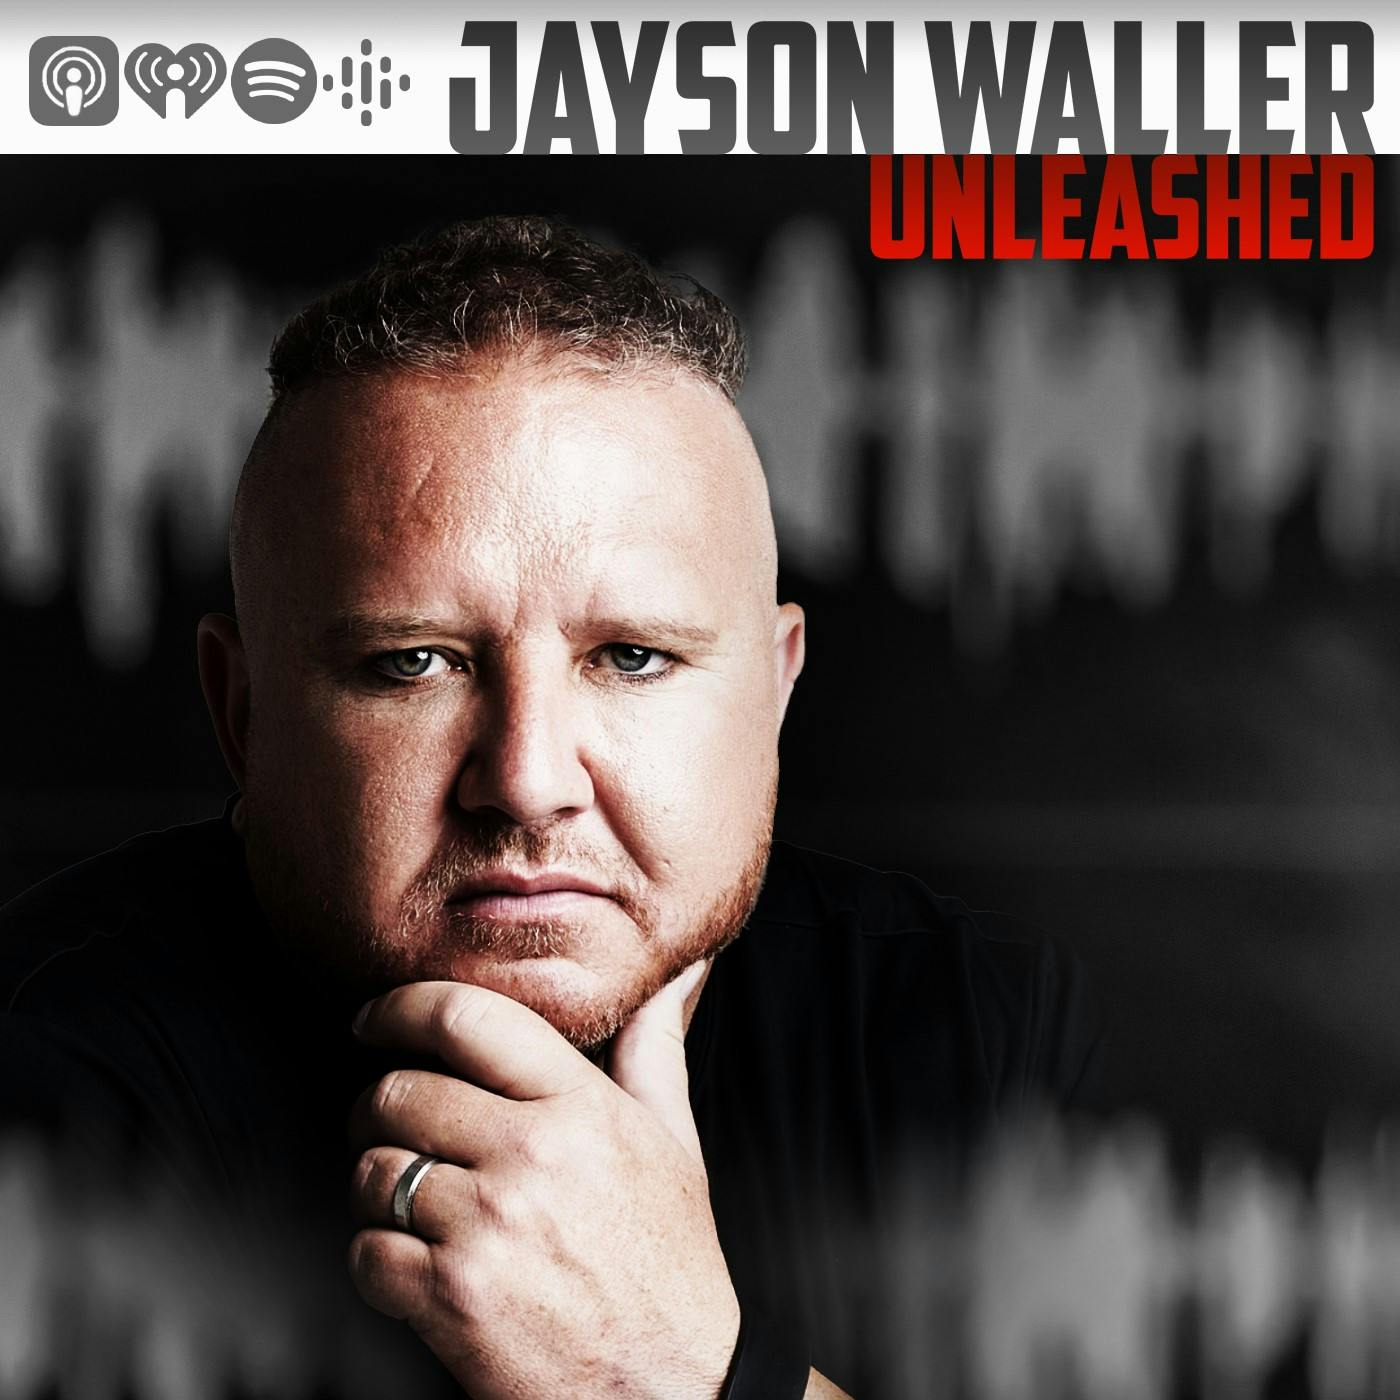 JAYSON WALLER UNLEASHED:Jayson Waller